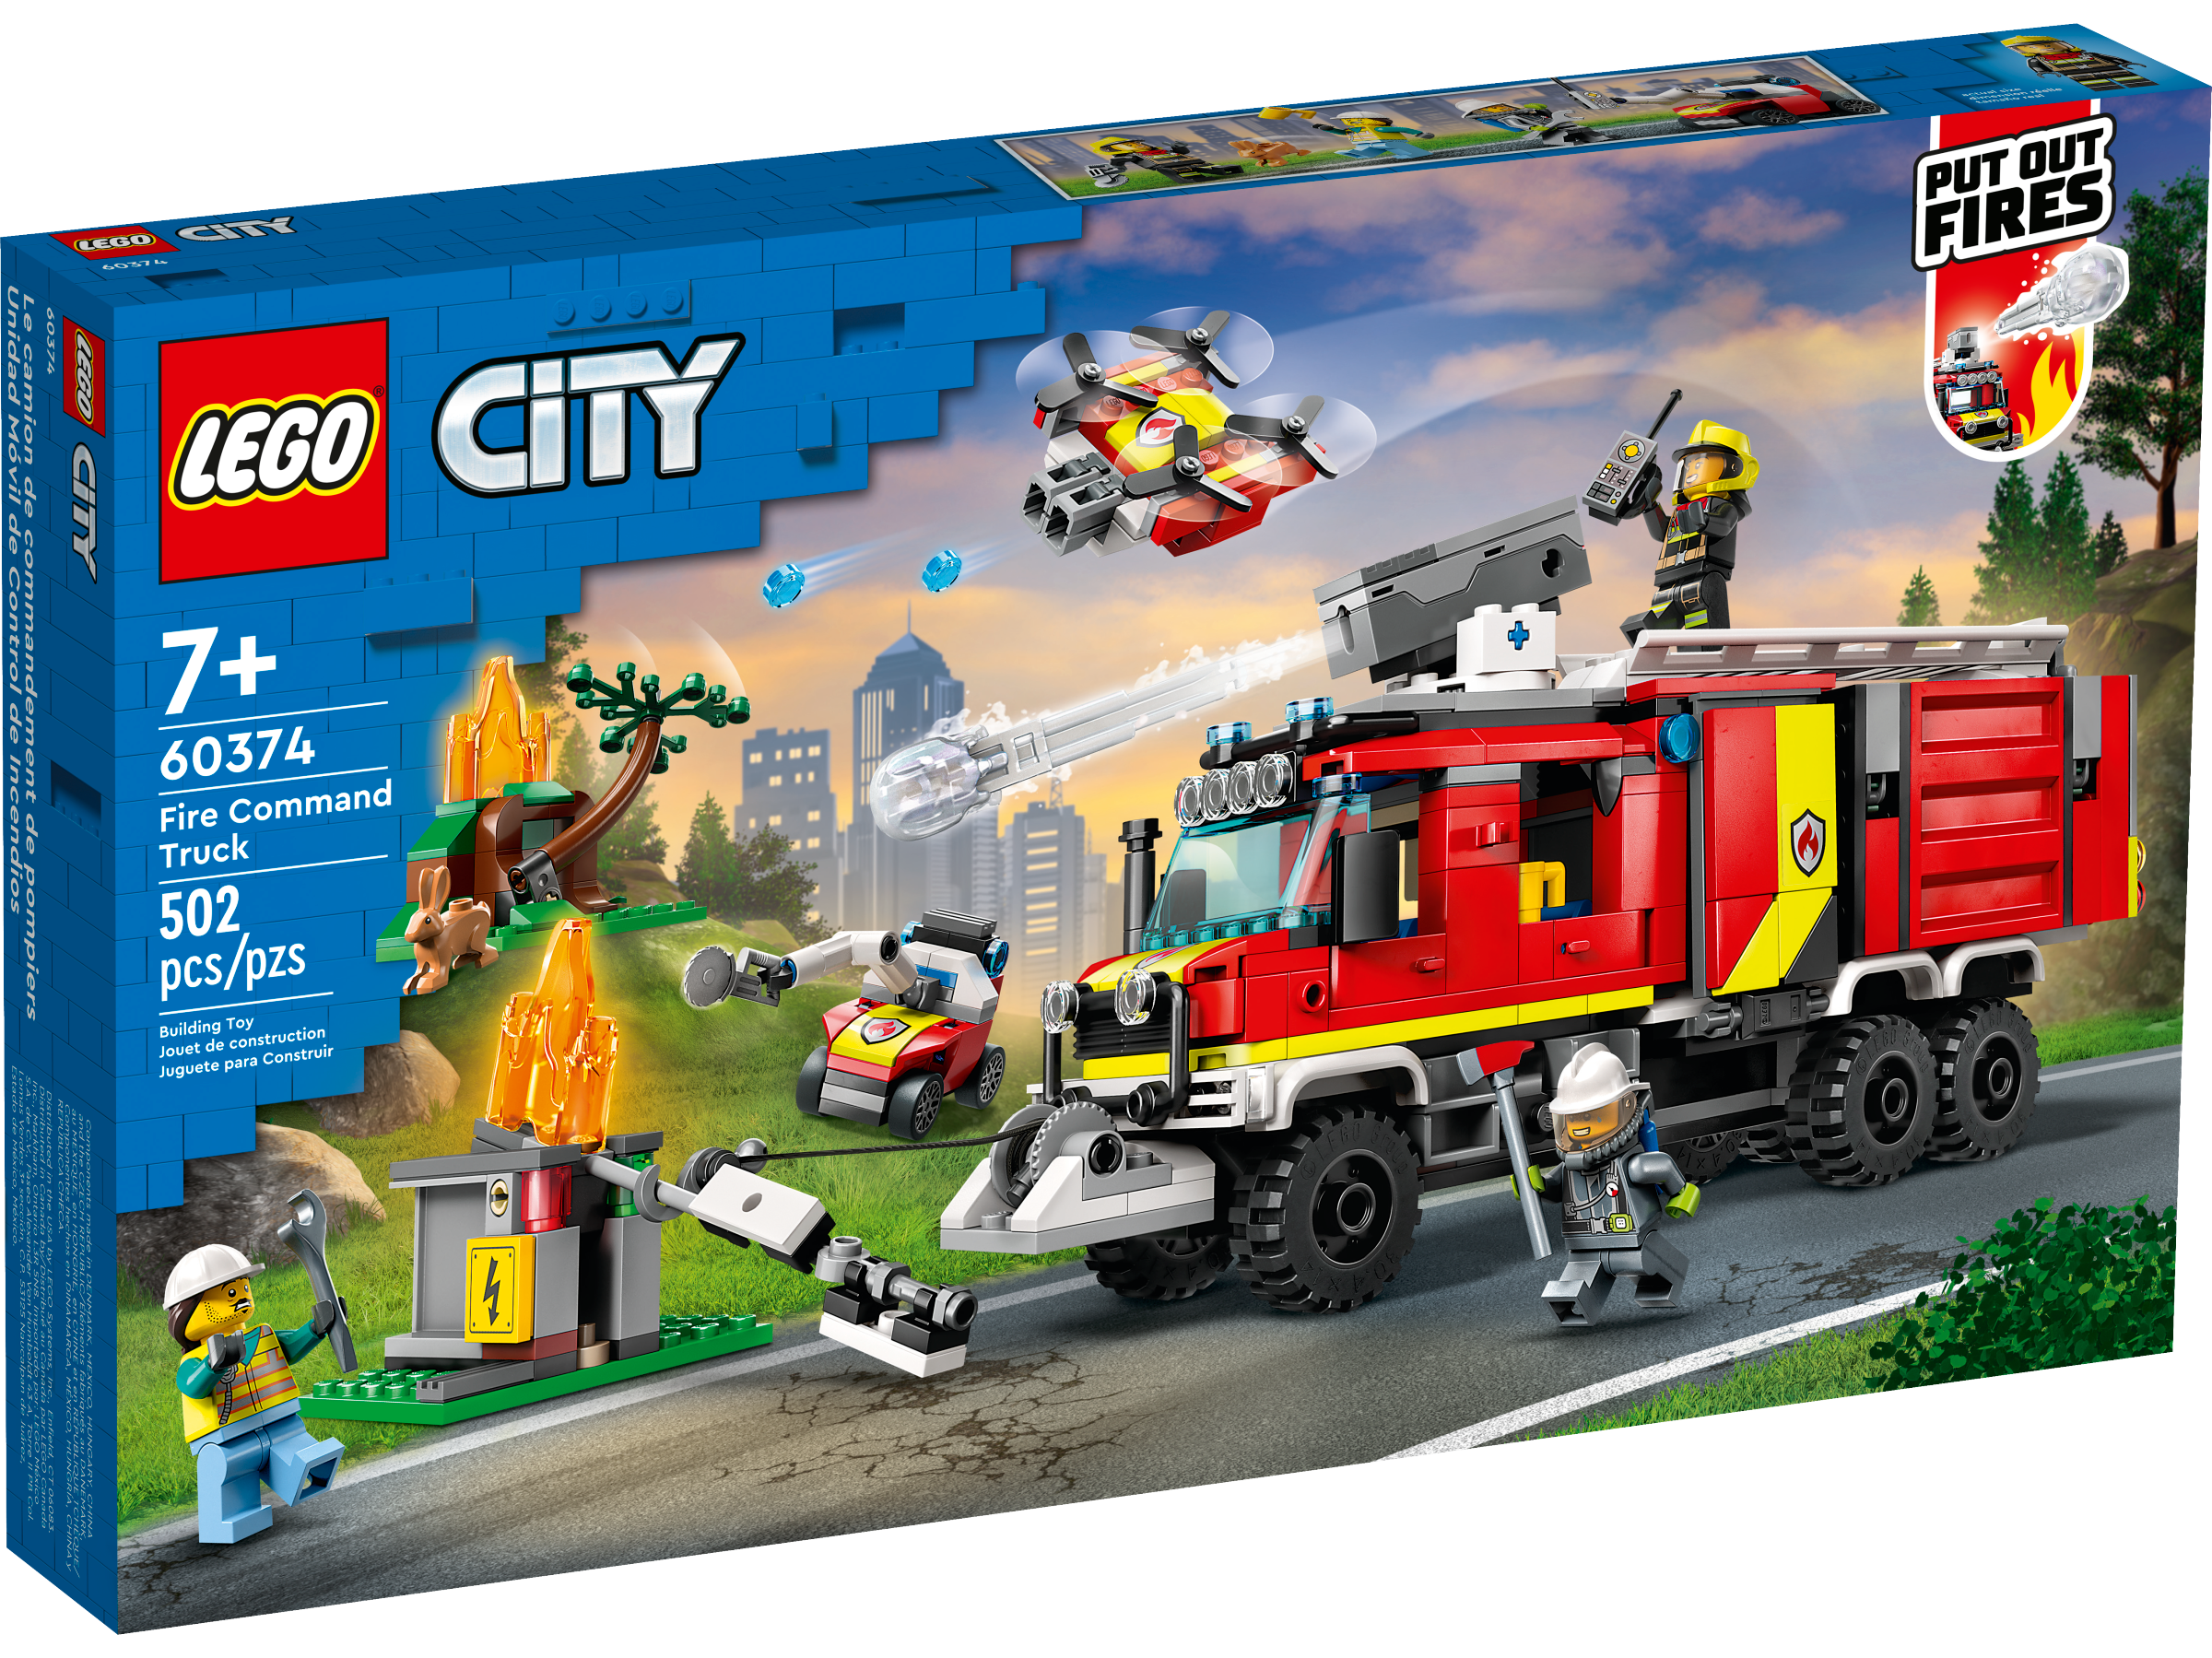 Fire Command Truck 60374, City